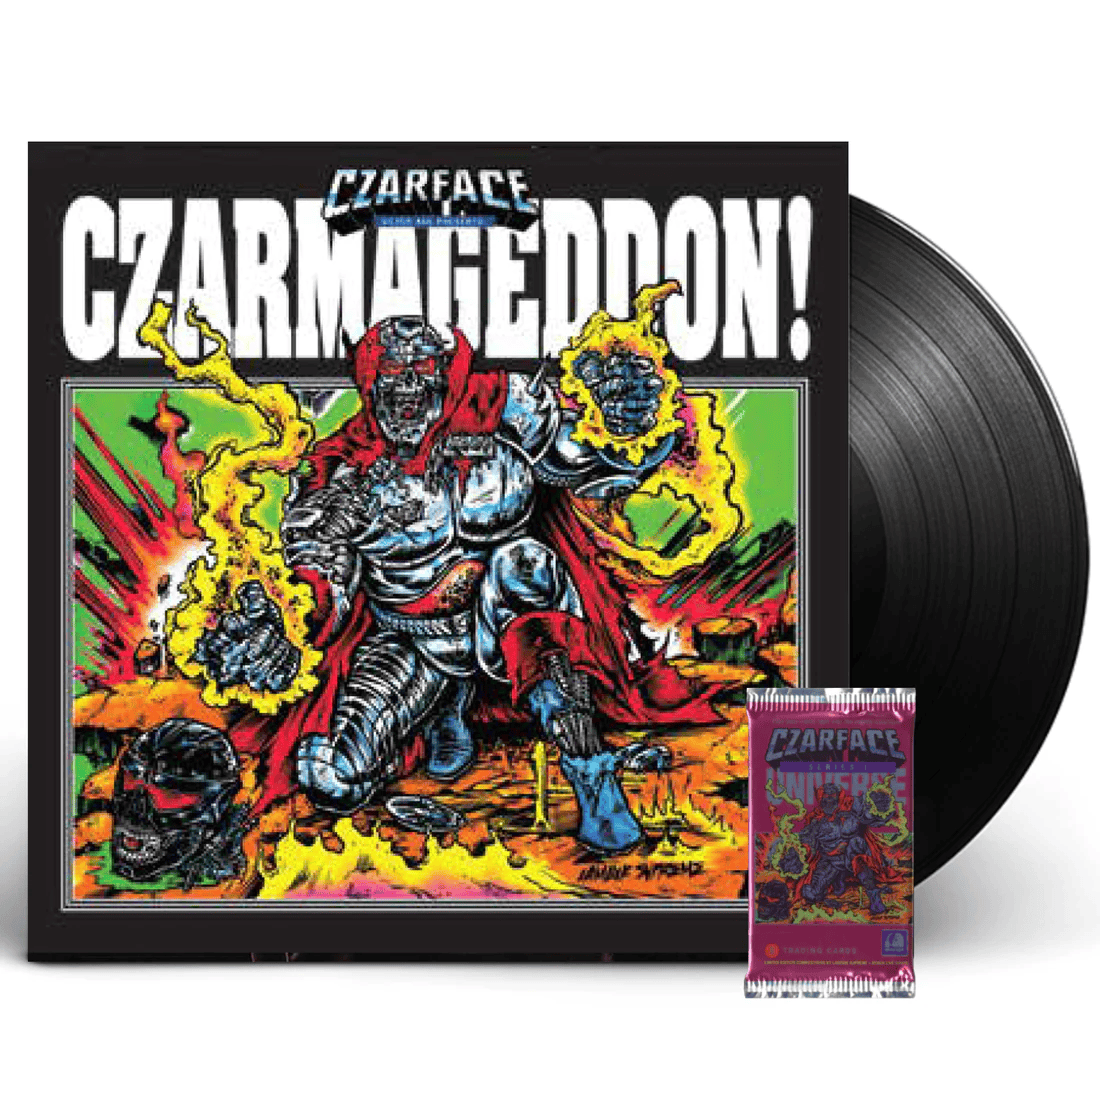 CZARFACE - Czarmageddon! Vinyl - JWrayRecords